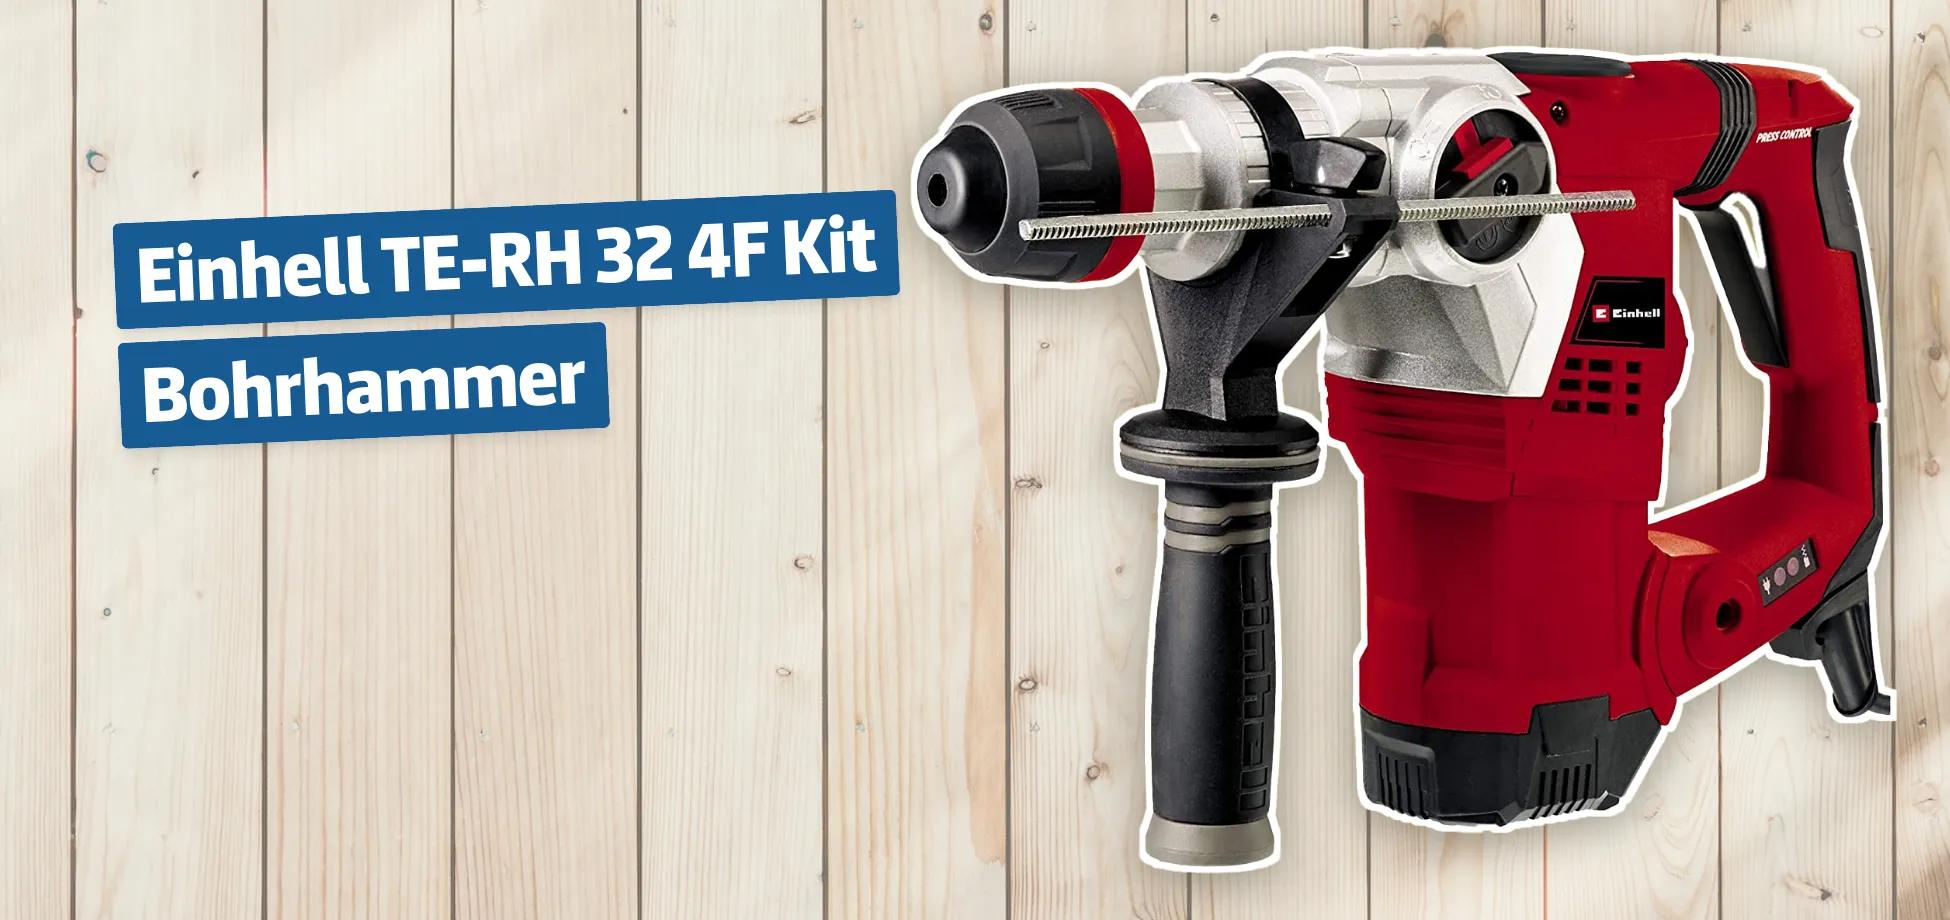 Einhell TE-RH 32 4F Kit Bohrhammer